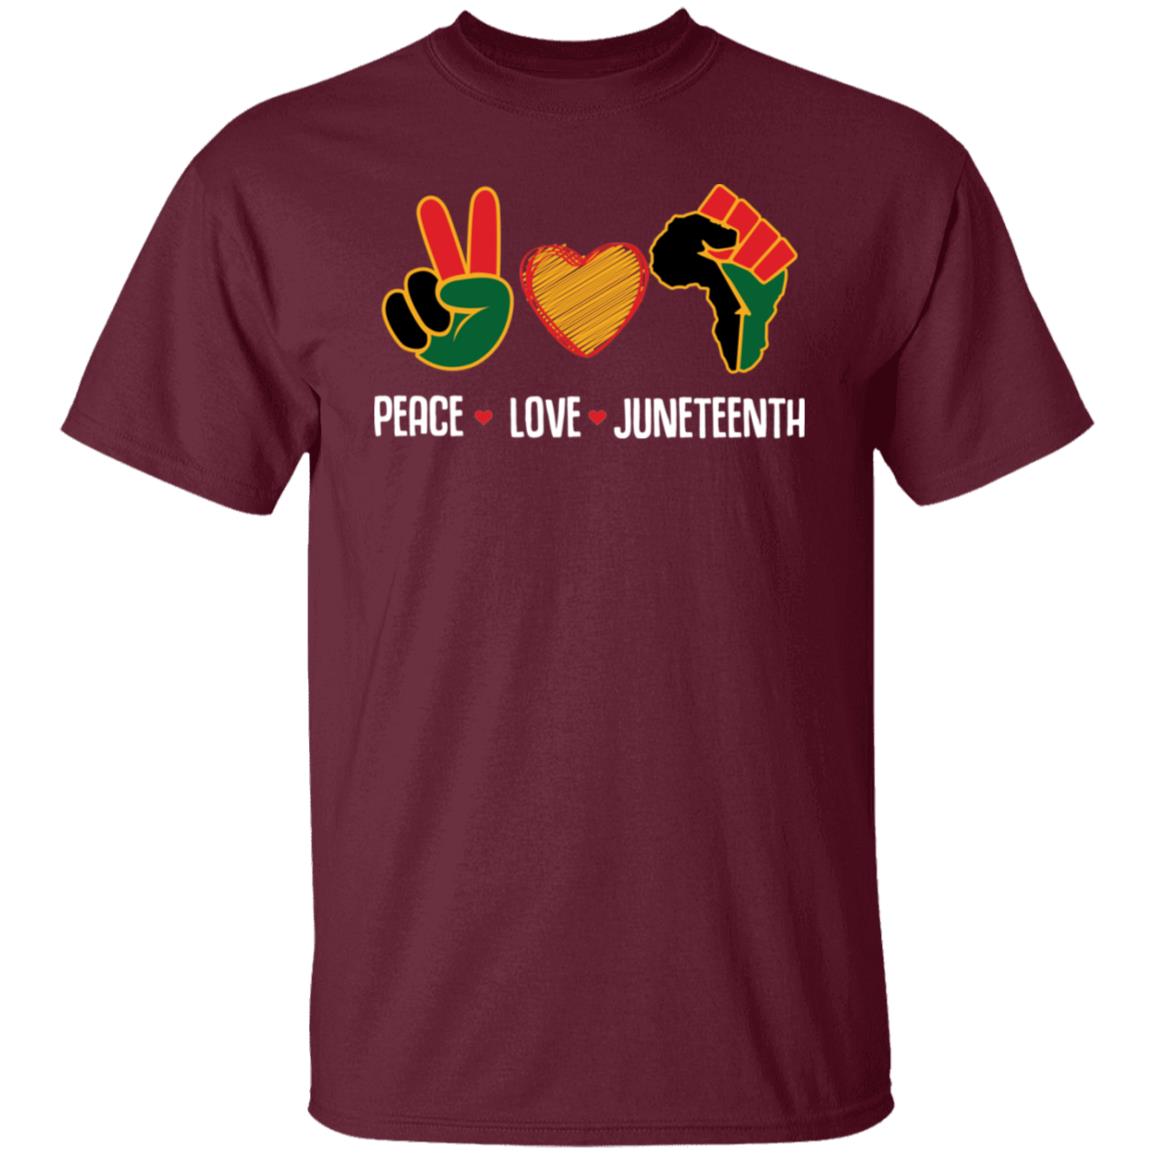 Peace Love Juneteenth T-shirt Apparel Gearment Unisex Tee Maroon S